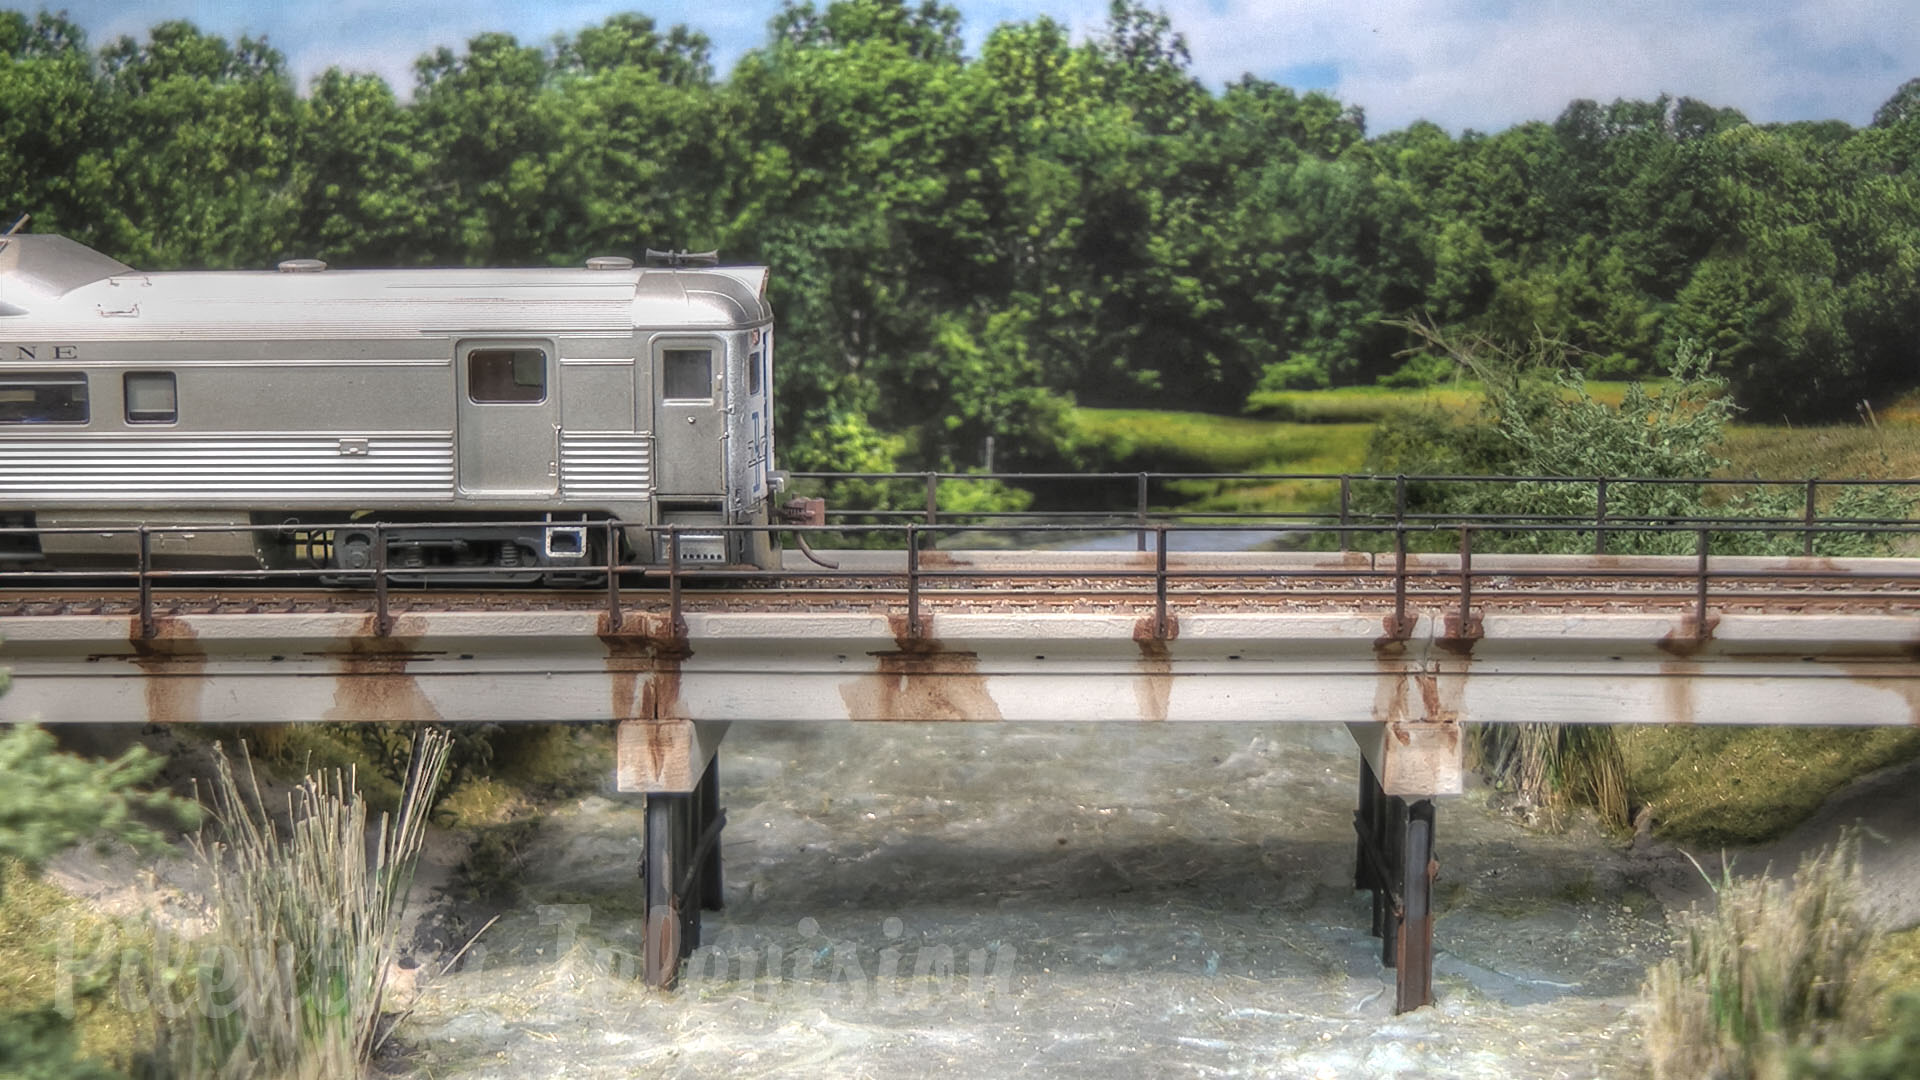 Model Railroad HO Scale Cold Water Junction by Gerrit Schoenmaker - Model Train Layout and Budd RDC (Rail Diesel Cars)